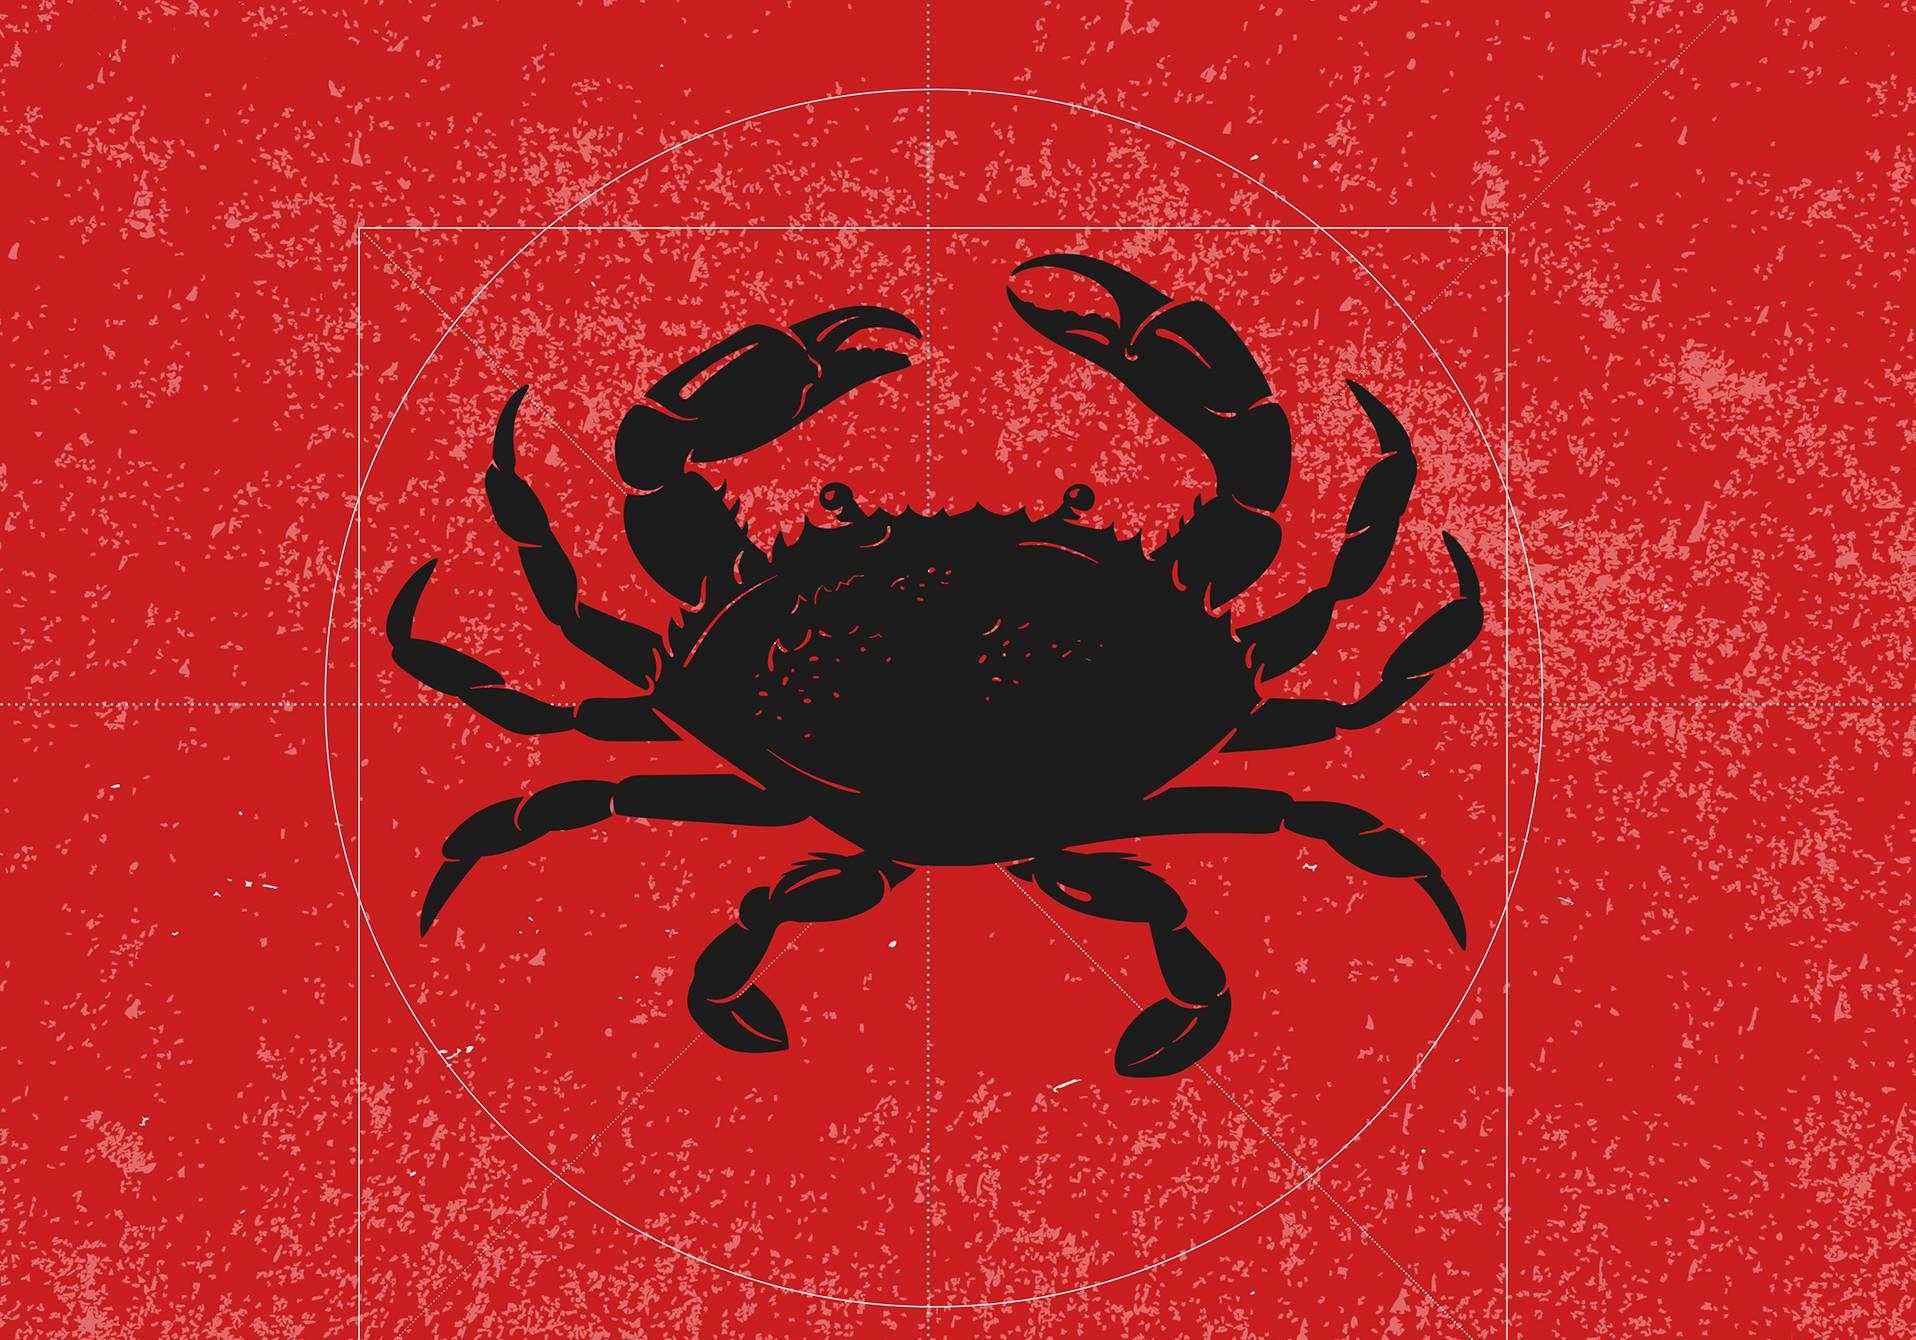 illustration de la forme du crabe